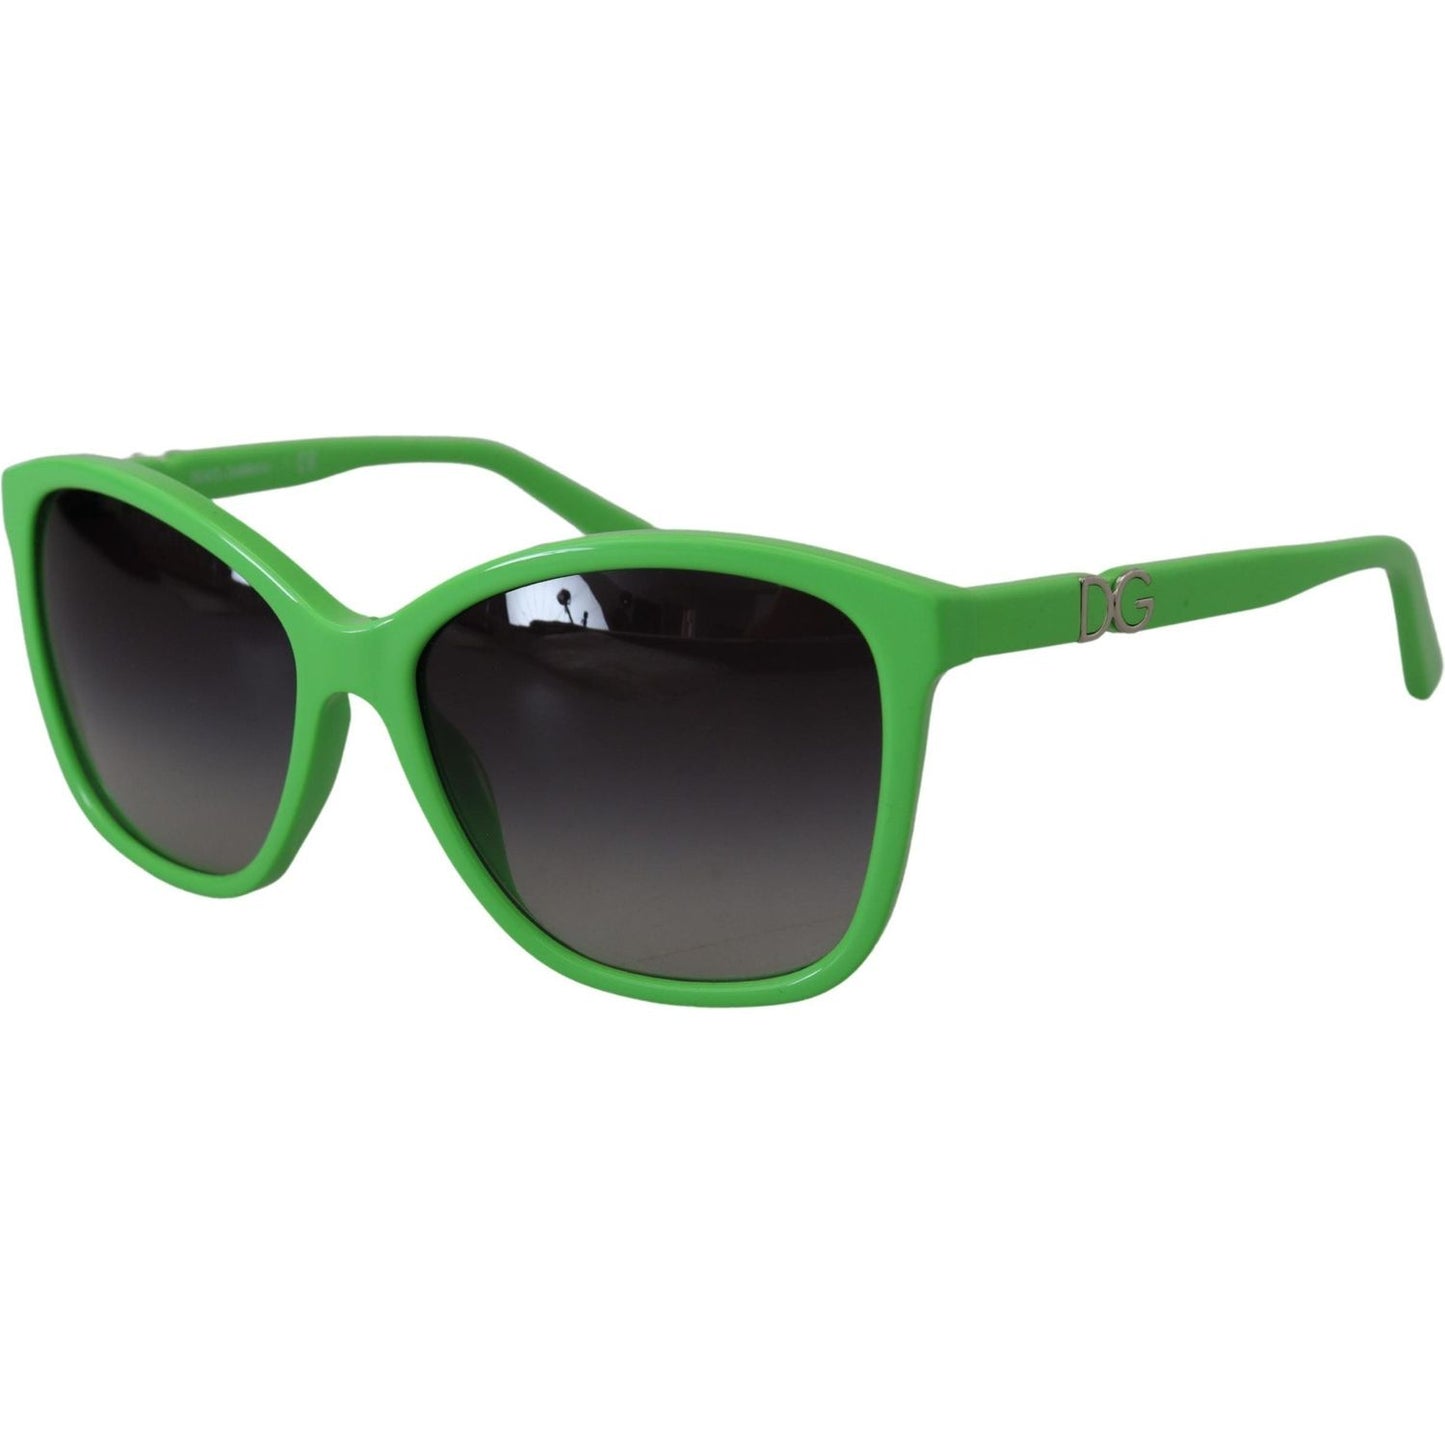 Dolce & Gabbana Chic Green Acetate Round Sunglasses green-acetate-frame-round-shades-dg4170pm-sunglasses IMG_3462-scaled-0887d339-686.jpg